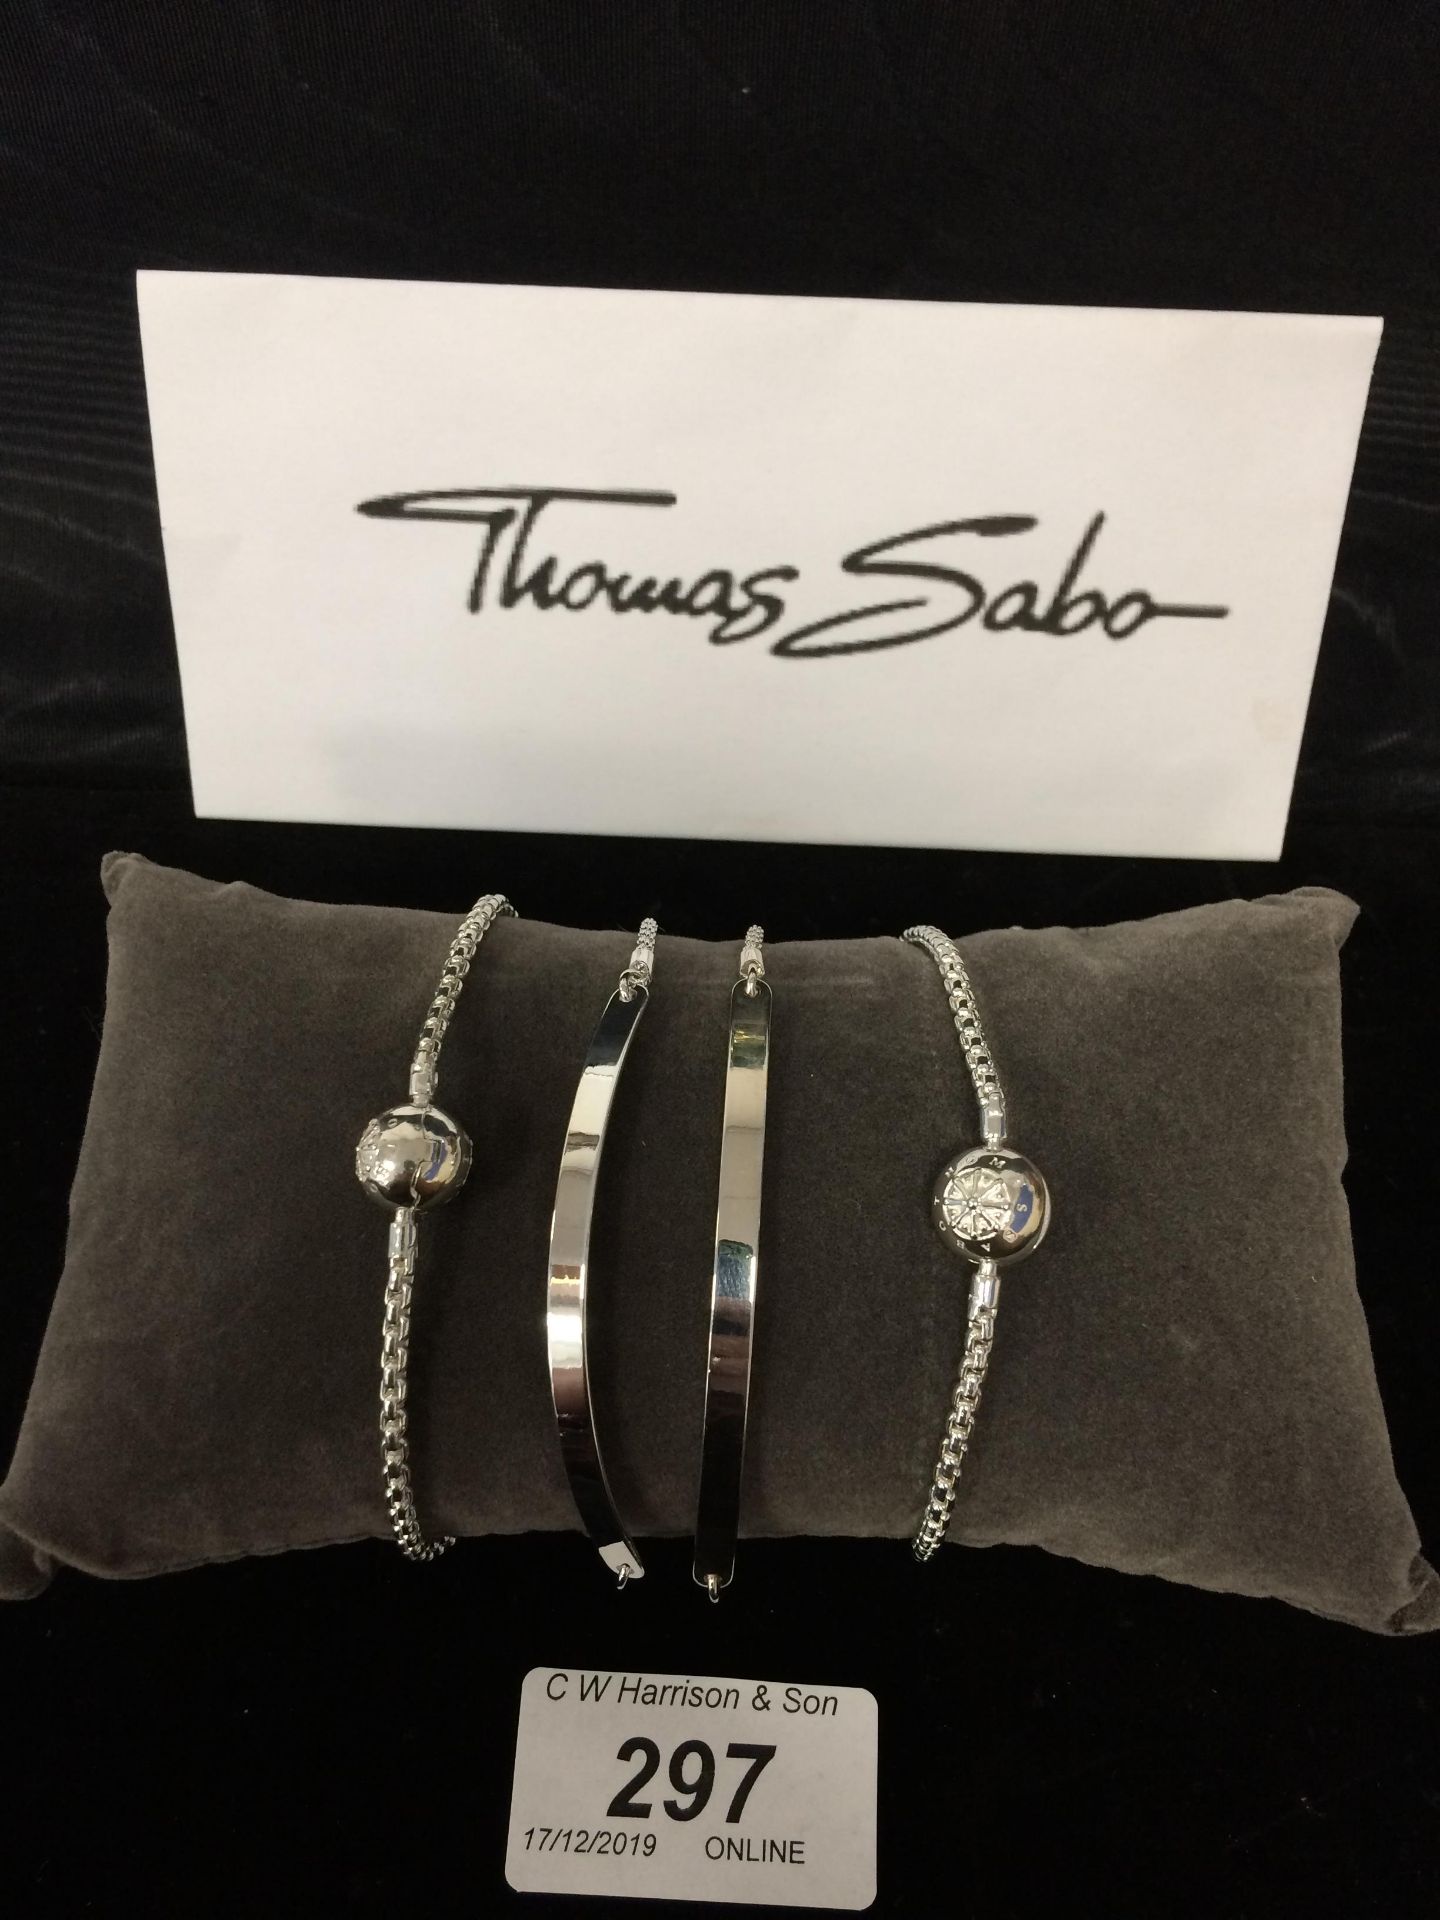 4 x Thomas Sabo 925 bracelets - 2 x karma beads bracelets with ball lock (£59 each) and 2 x Love